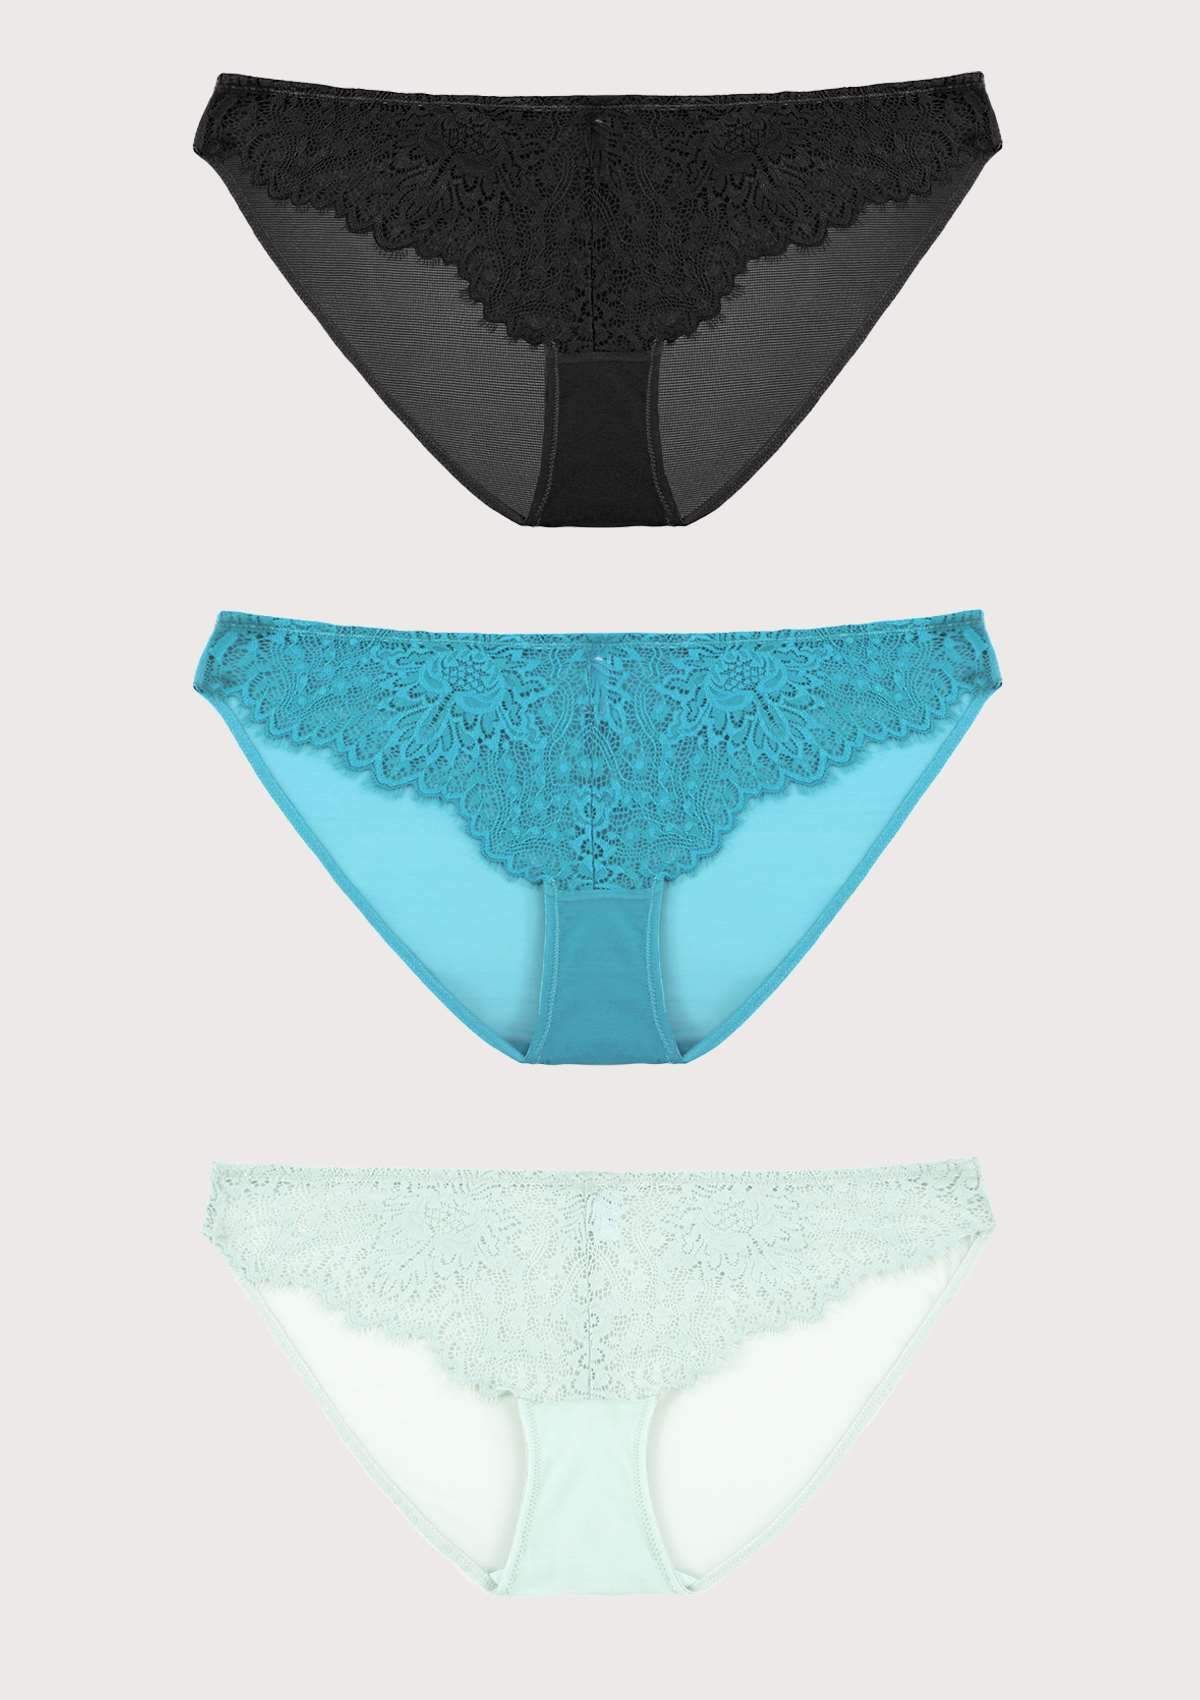 HSIA Sunflower Exquisite Lighweight Soft Lace Bikini Panties 3 Pack - XXL / Black+Horizon Blue+Pink